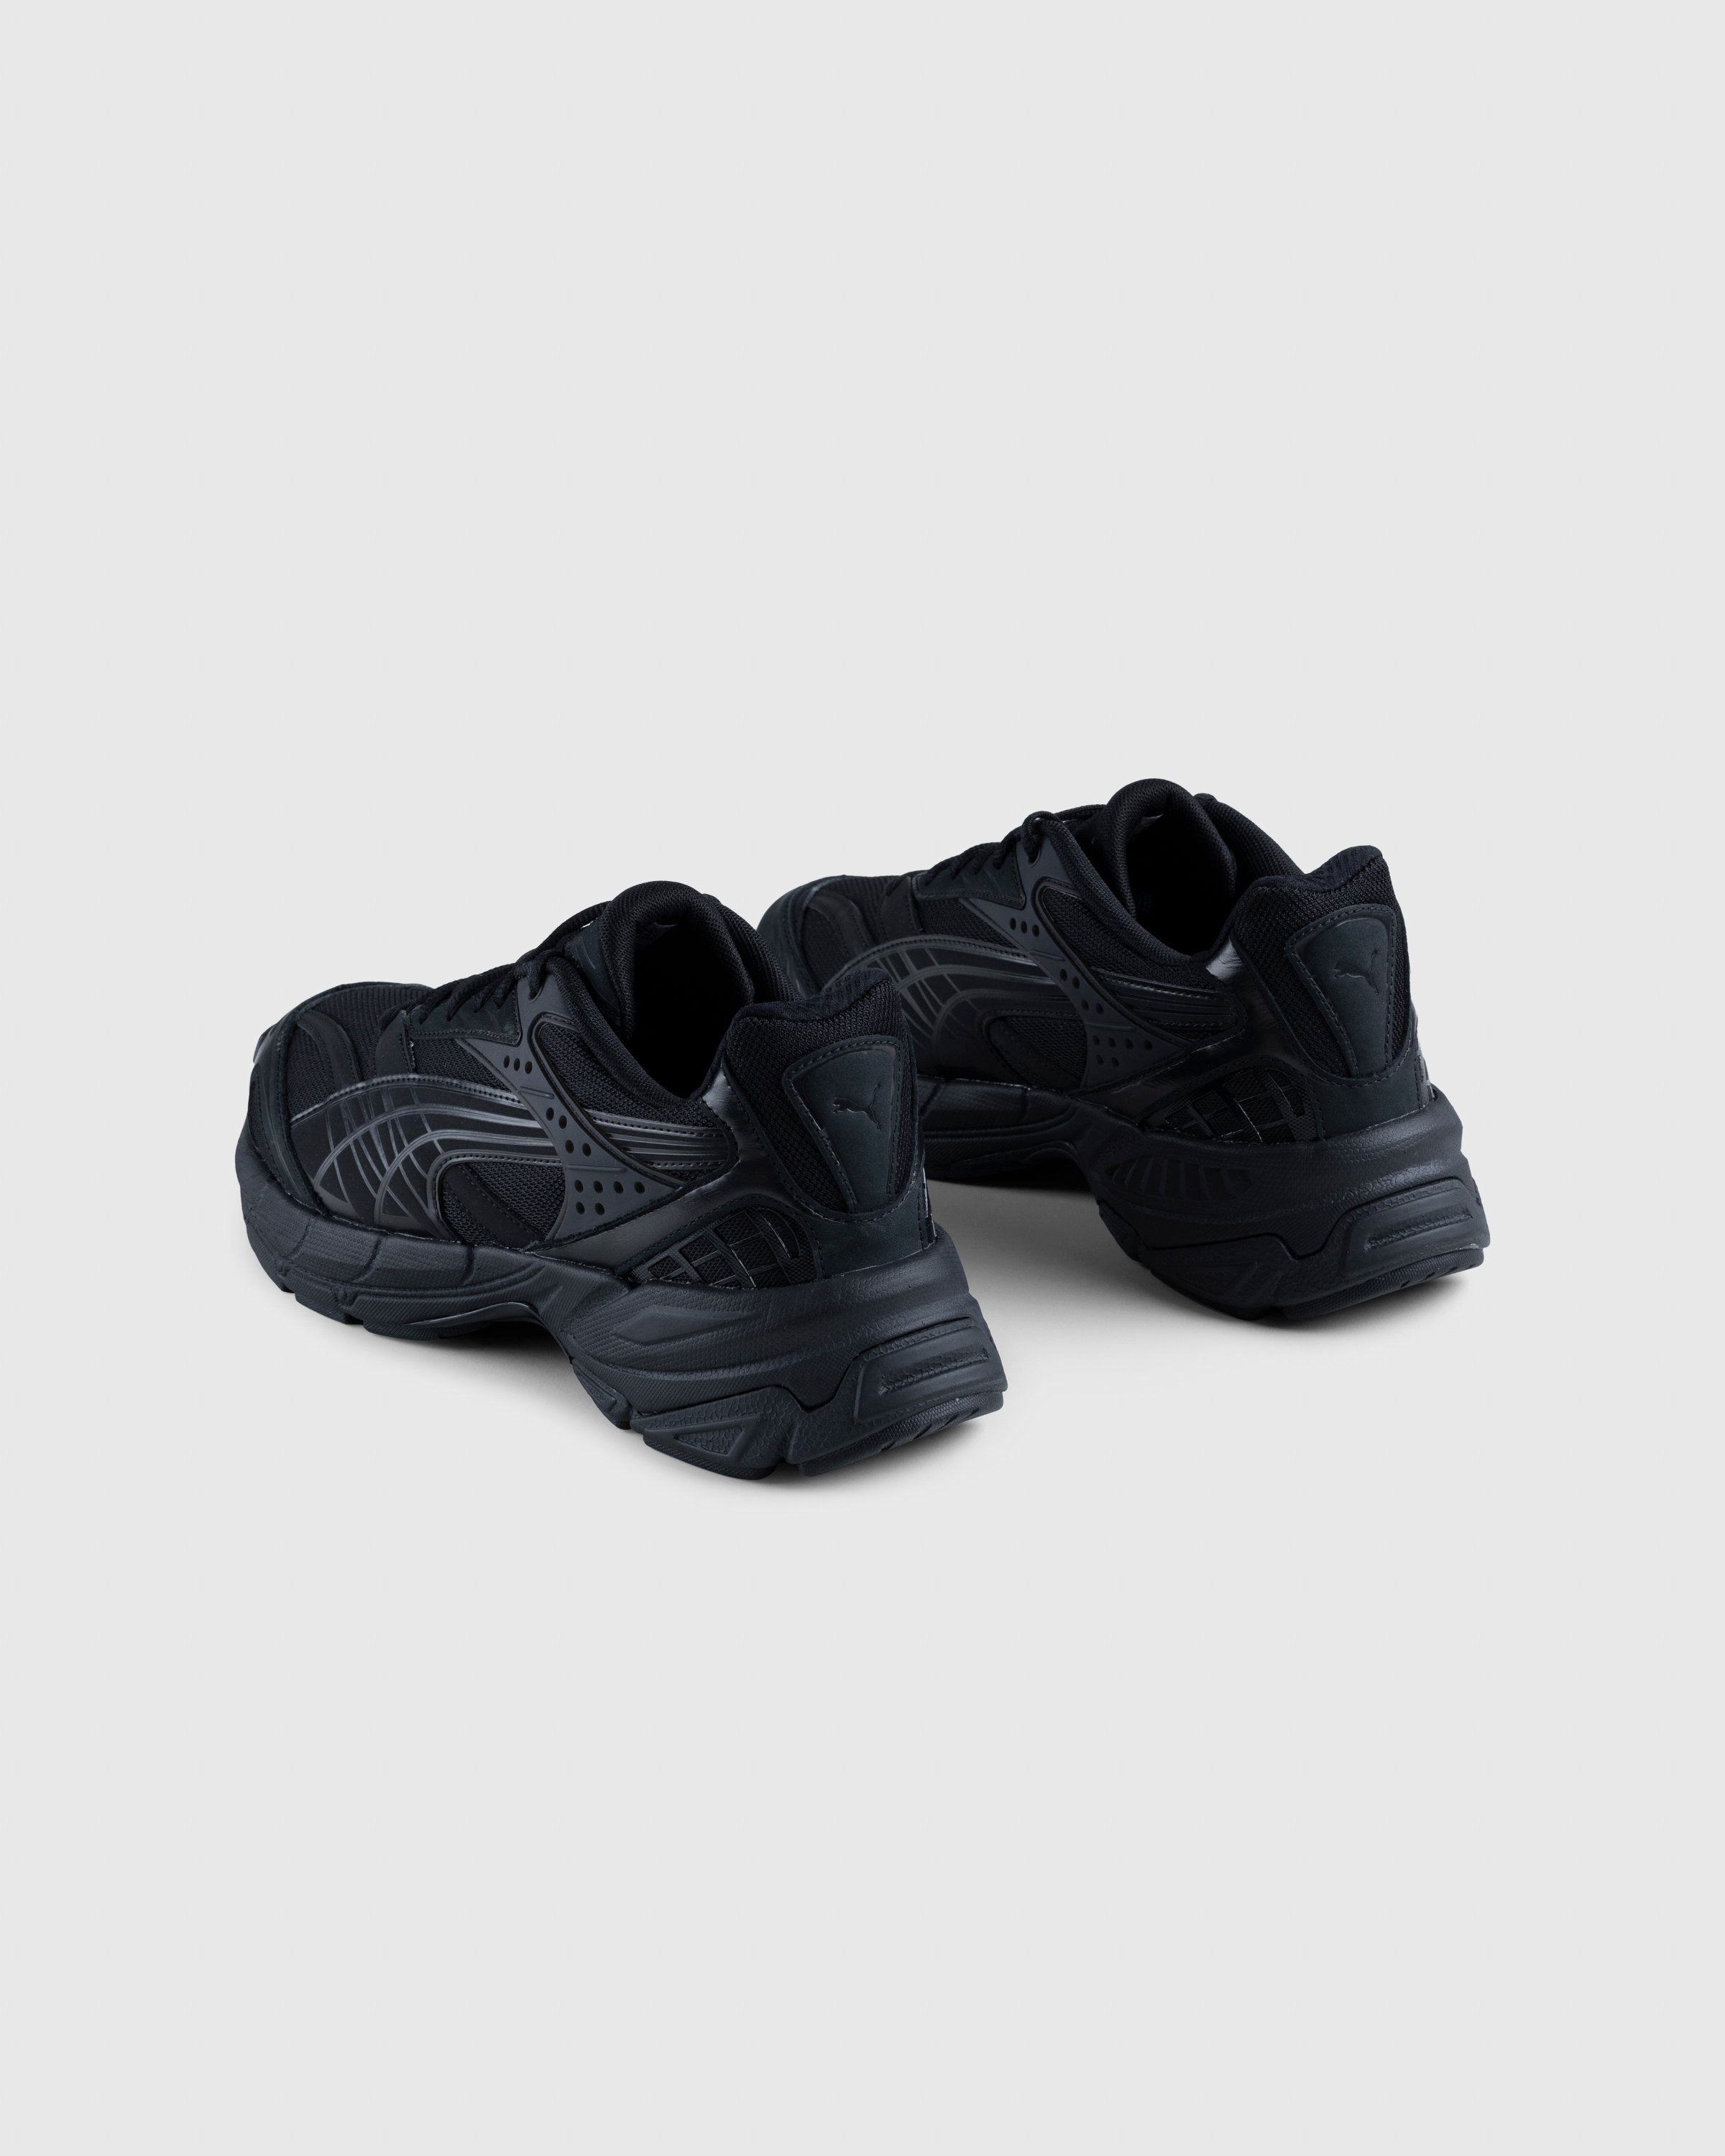 Puma – Velophasis PRM Black - Sneakers - Black - Image 4